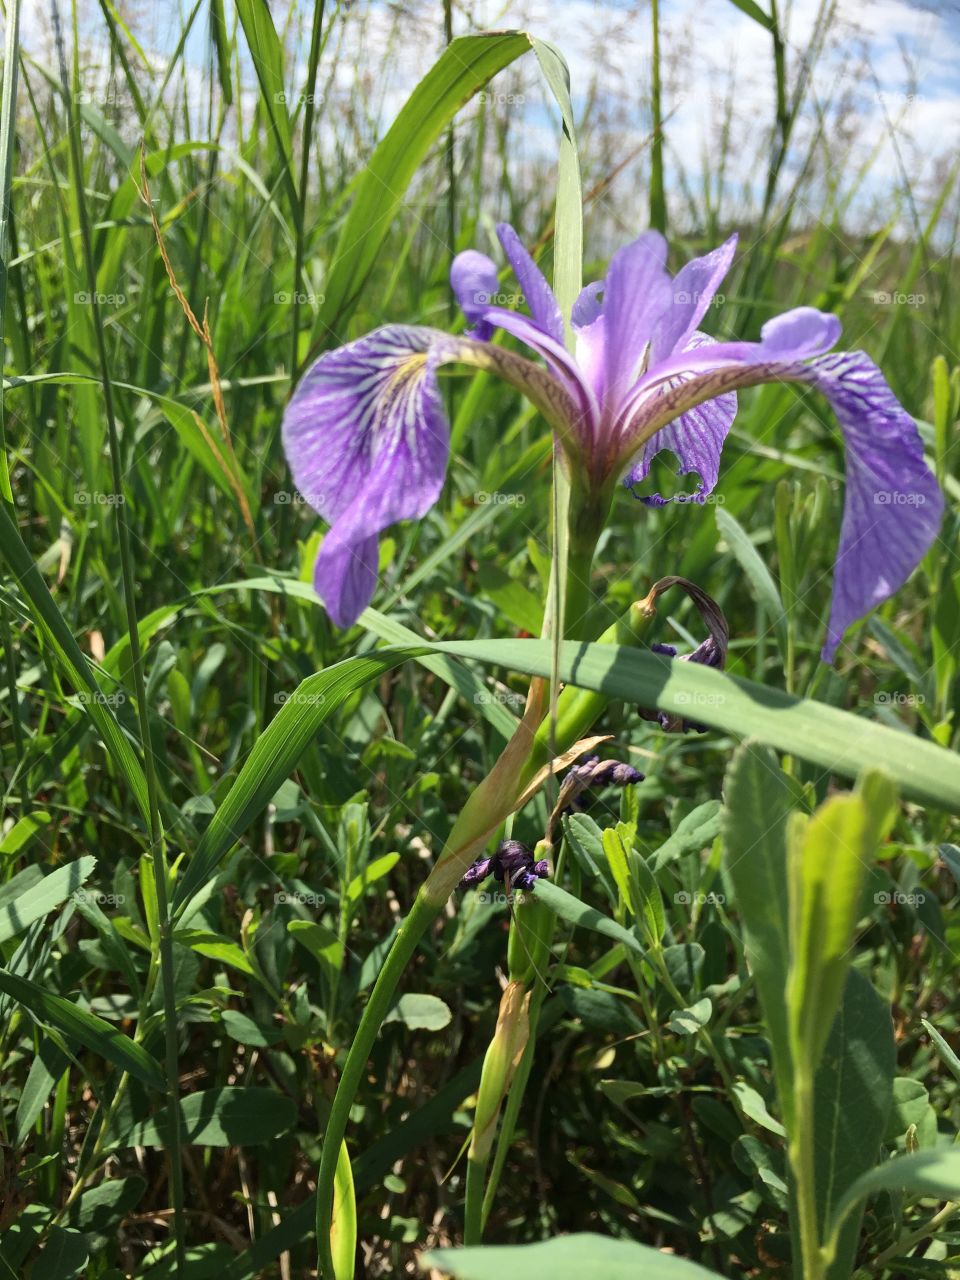 Quebec’s iris versicolore (blue iris) in Saguenay by spring